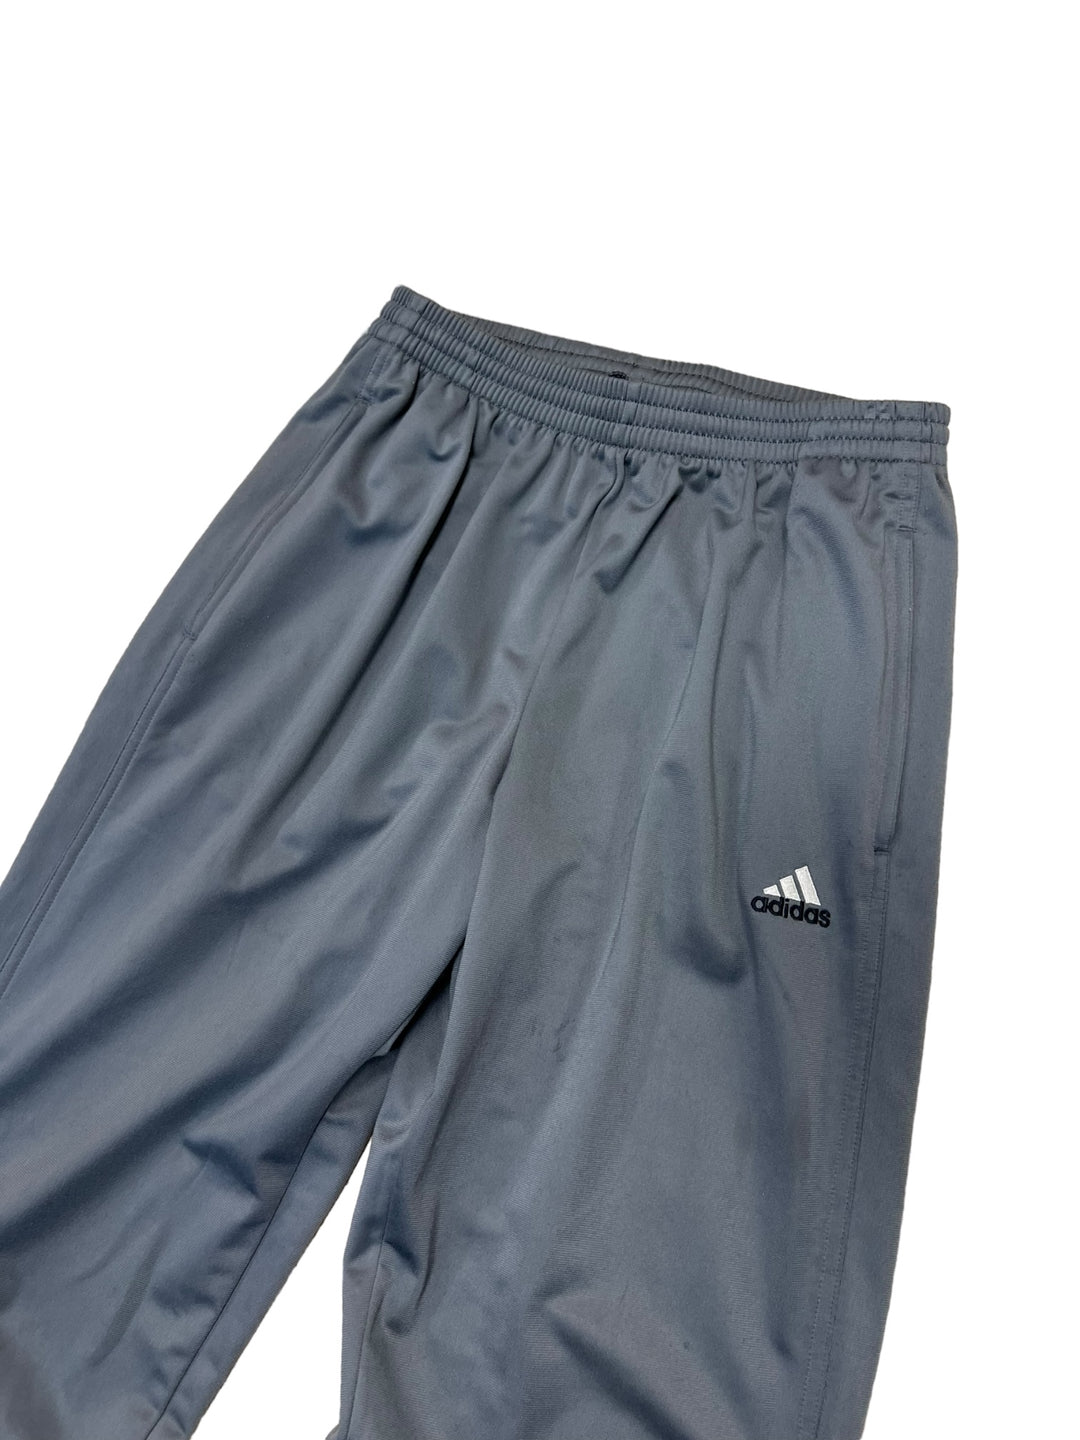 Adidas vintage sweatpants men’s medium